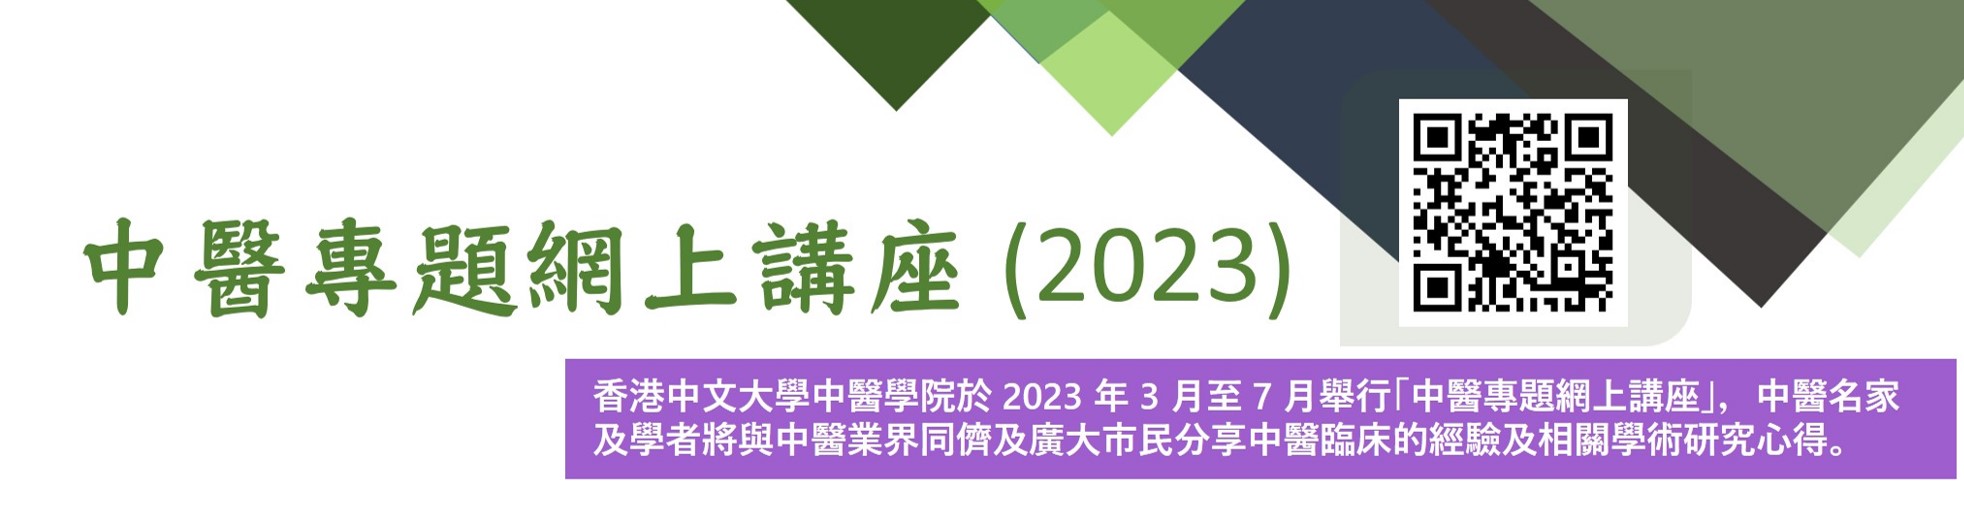 online Seminar banner 2023V2